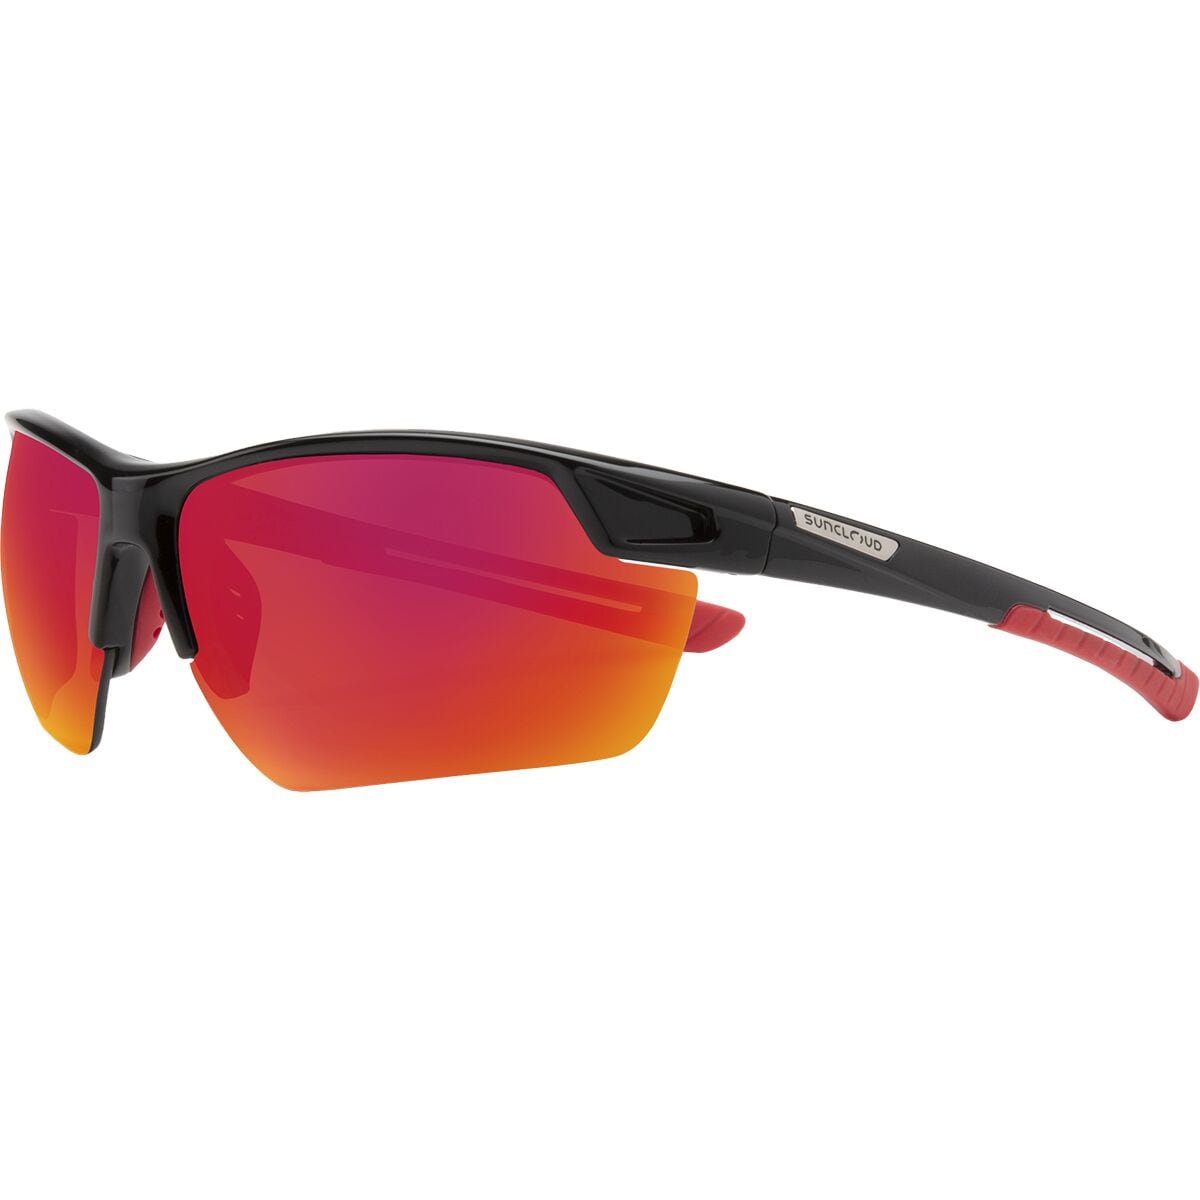 Поляризованные солнцезащитные очки contender Suncloud Polarized Optics, цвет black/polarized red mirror очки солнцезащитные stylemark polarized l1475a